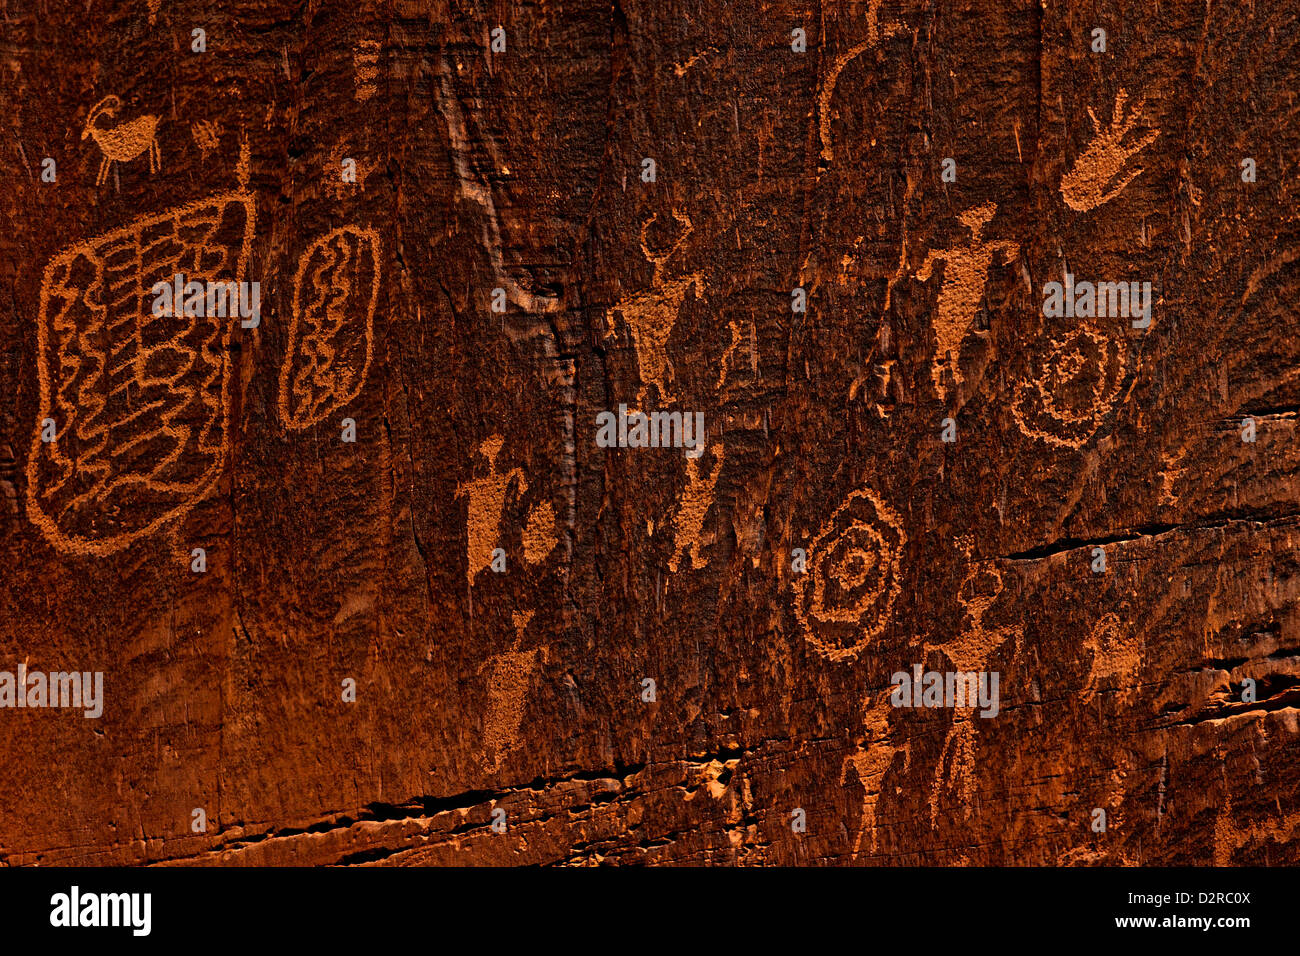 Horned anthropomorphs holding shields, Formative Period Petroglyphs, Utah Scenic Byway 279, Potash Road, Moab, Utah, USA Stock Photo